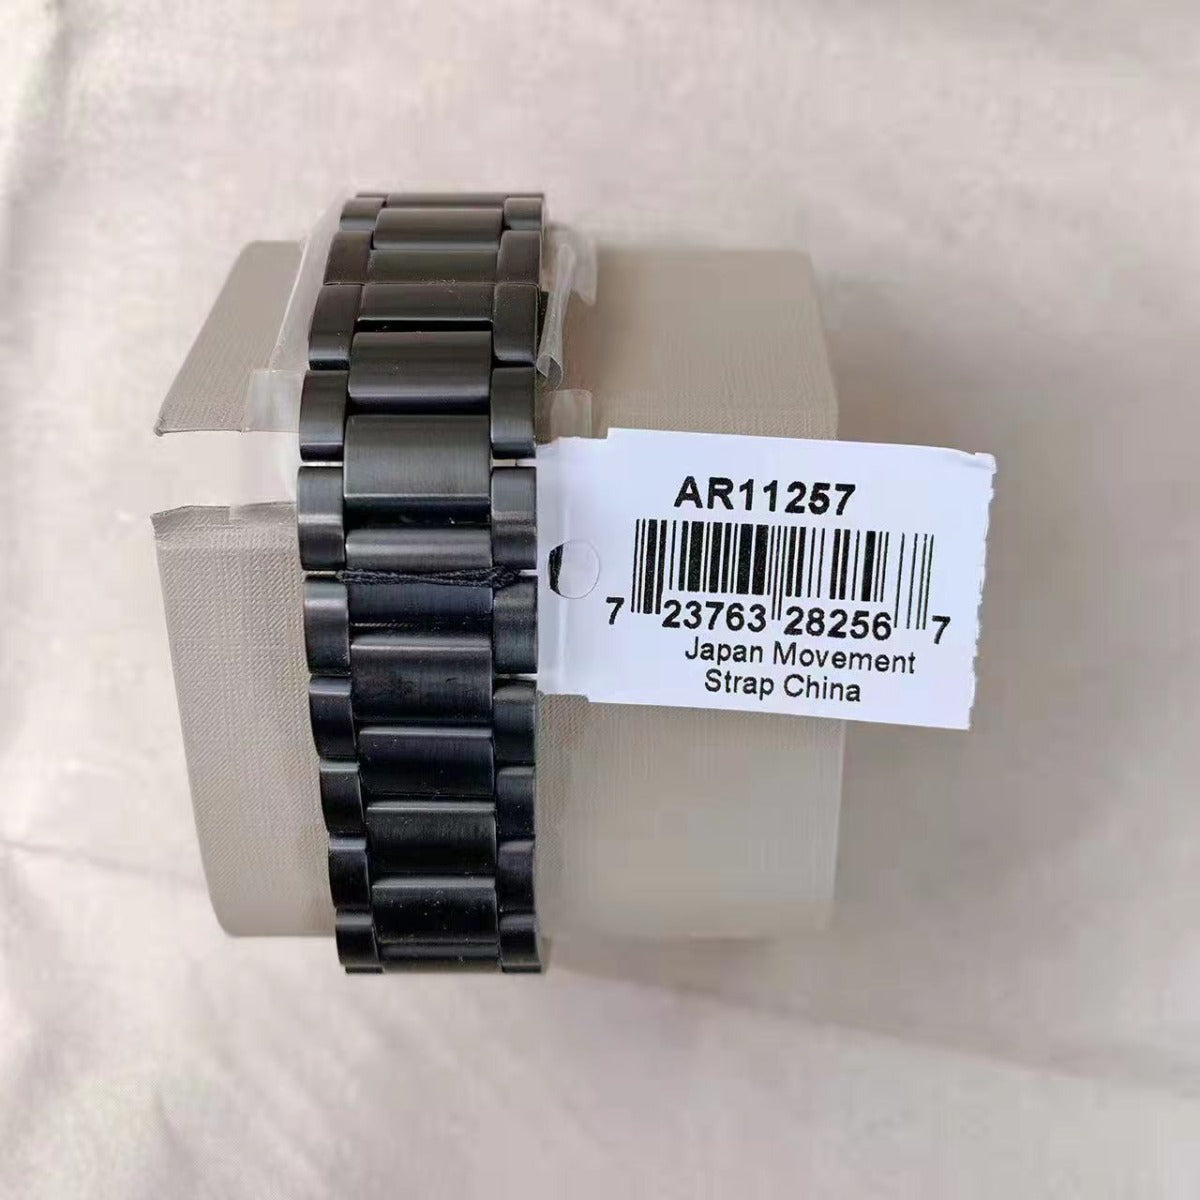 Emporio Armani Men's Three-Hand Black-Tone Stainless Steel Watch AR11257 723763282567